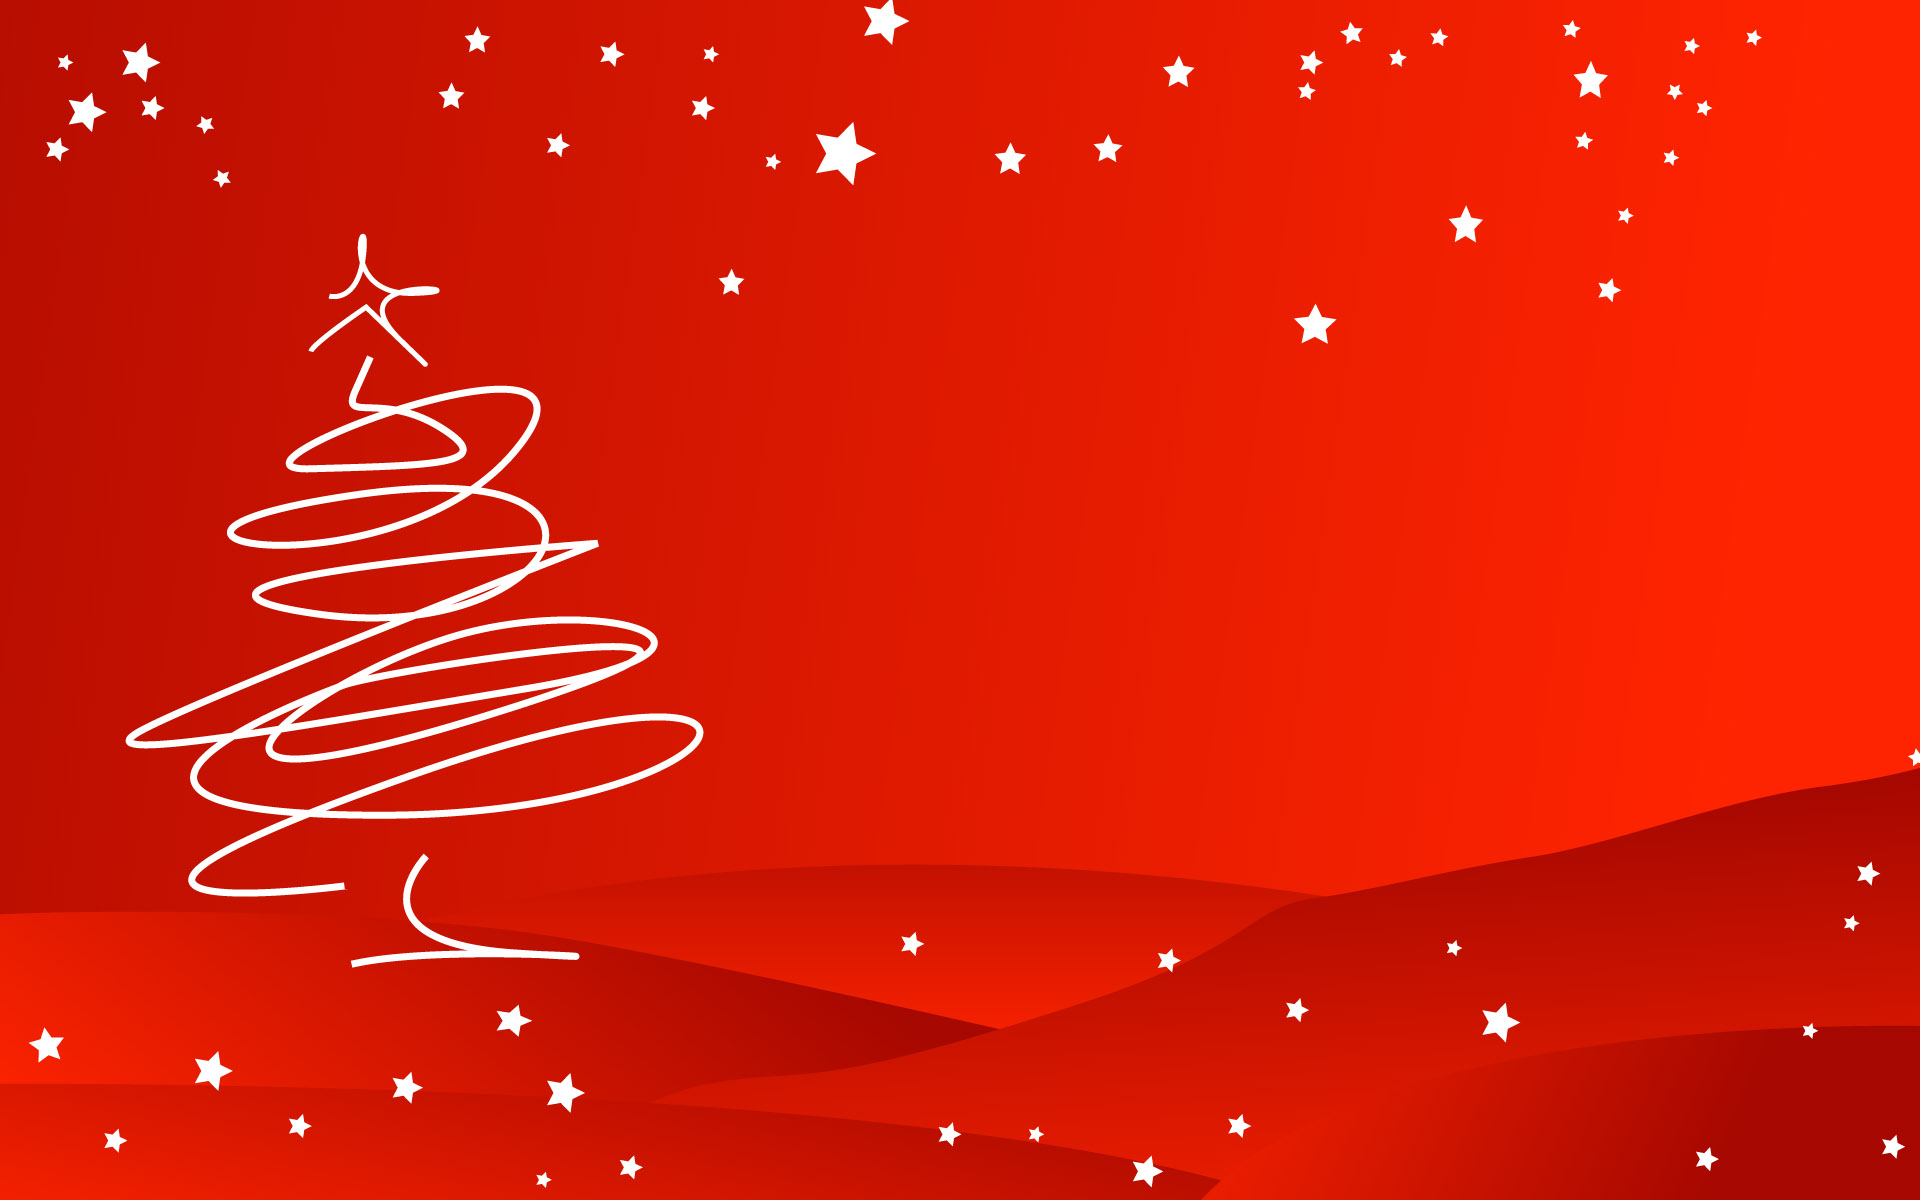 Ara ve Nadal 2013: una mica de gresca i xerinol·la abans de Nadal